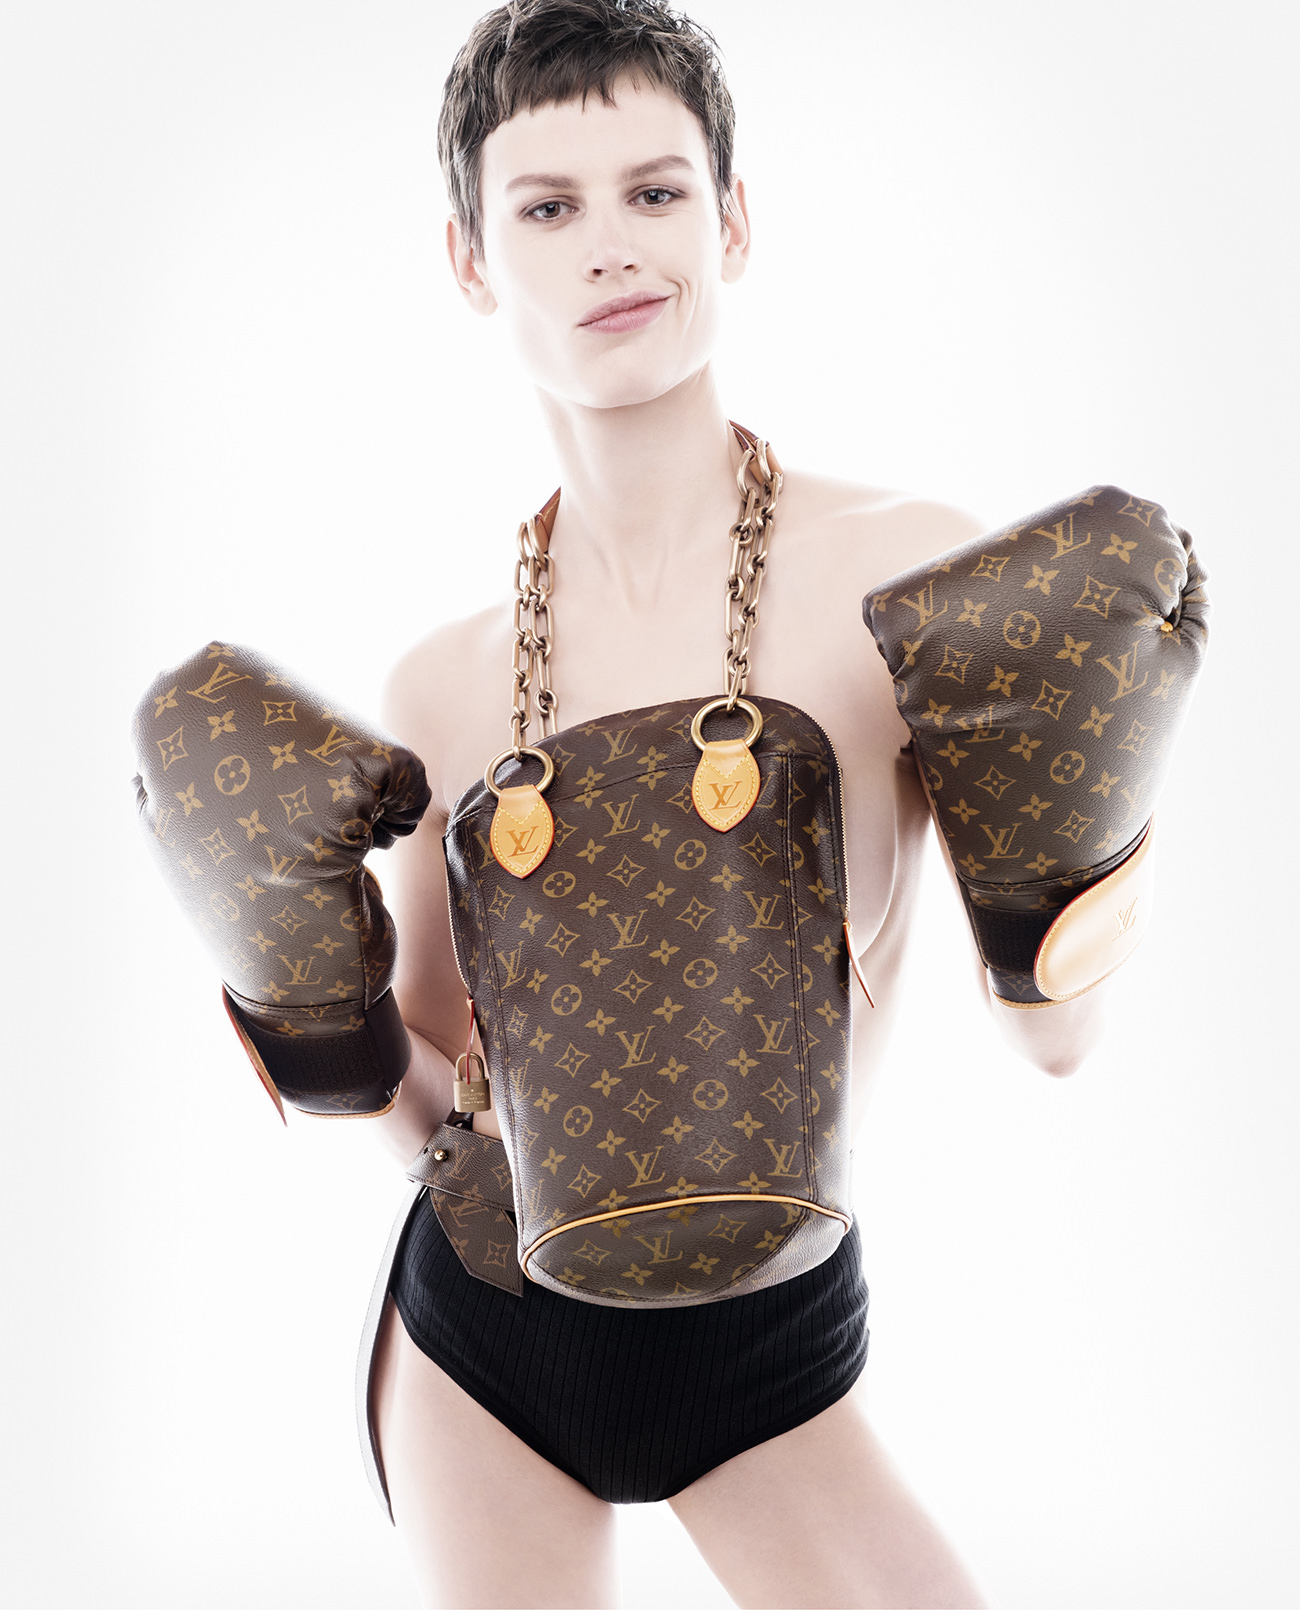 Karl Lagerfeld's $175,000 Punching Bag